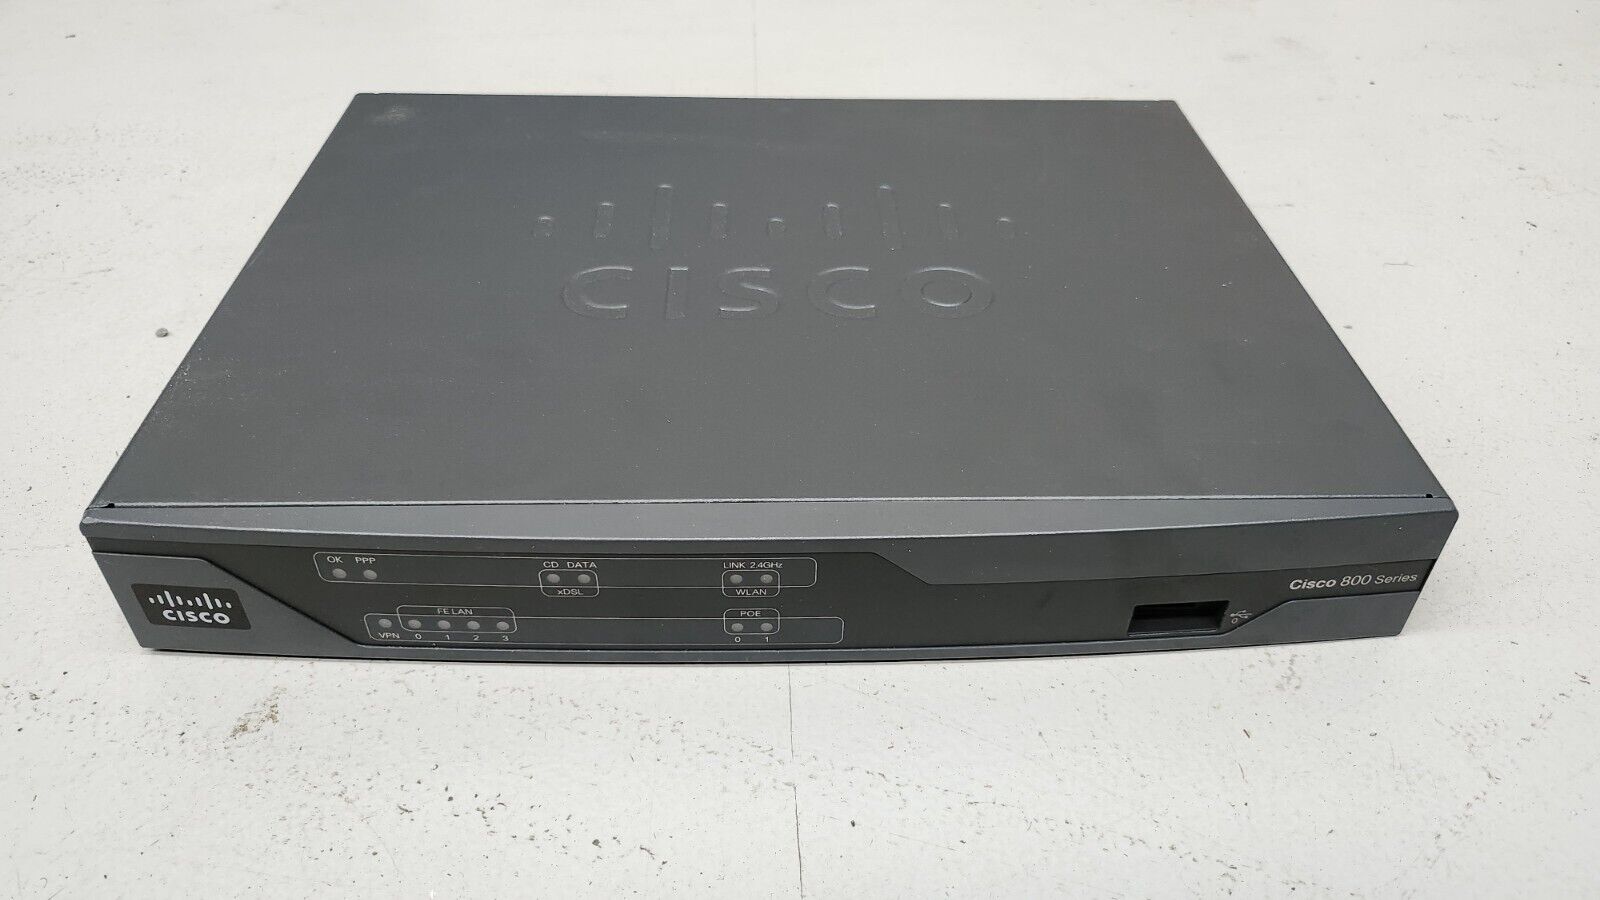 CISCO 800 SERIES, CISCO887VA-K9 V02 ROUTER Integrated Services Router C887VA-K9